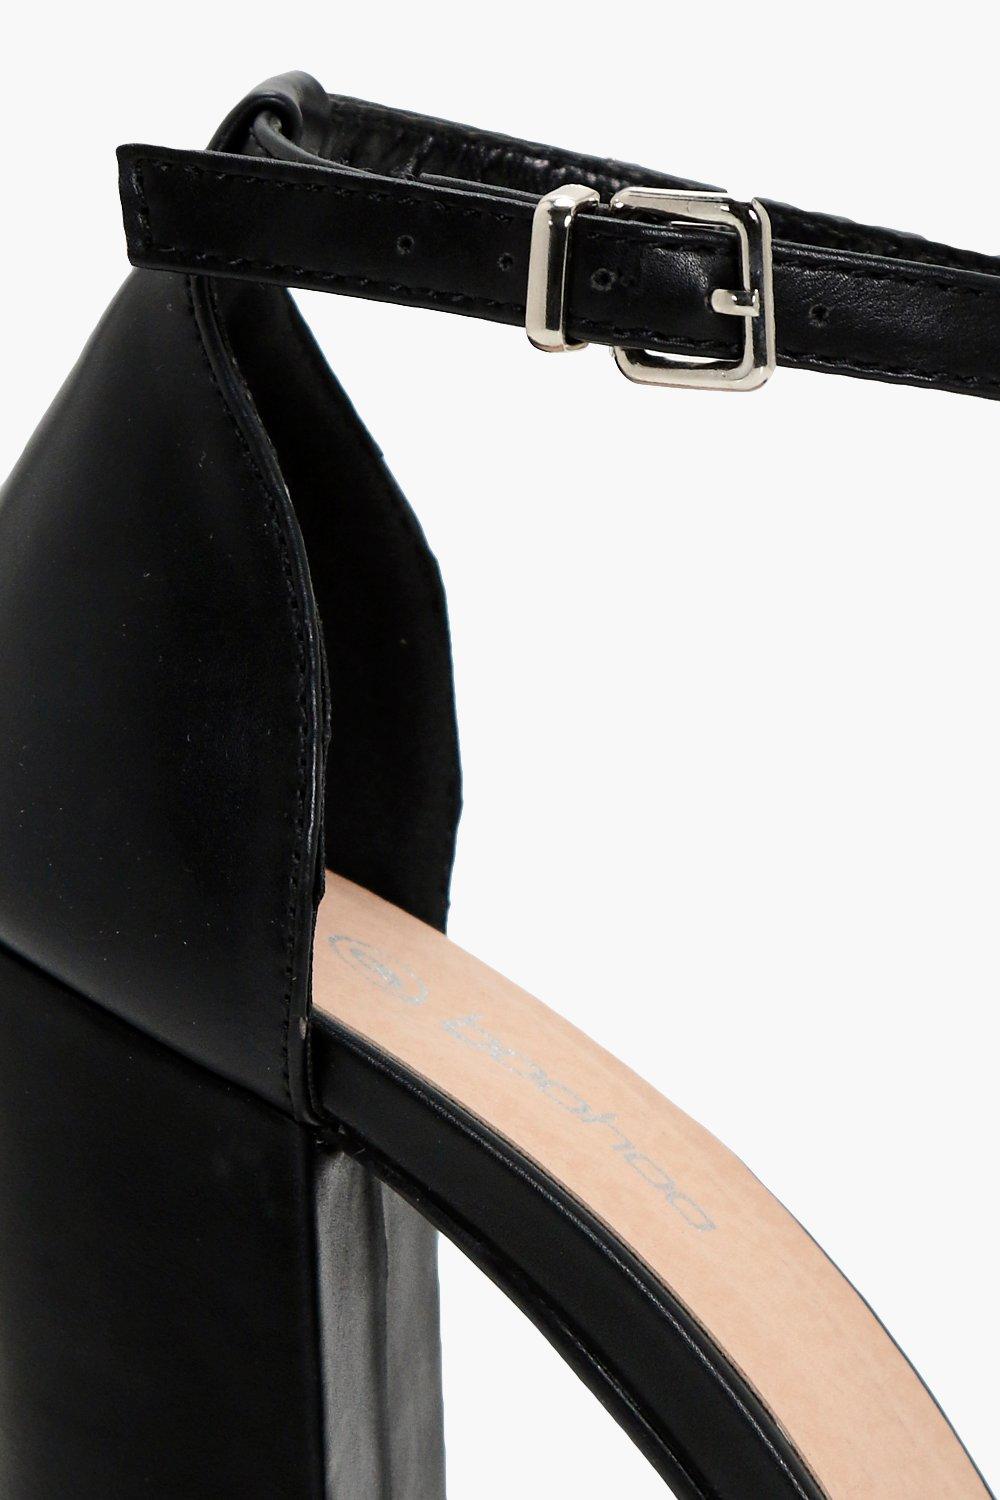 wide width black platform heels